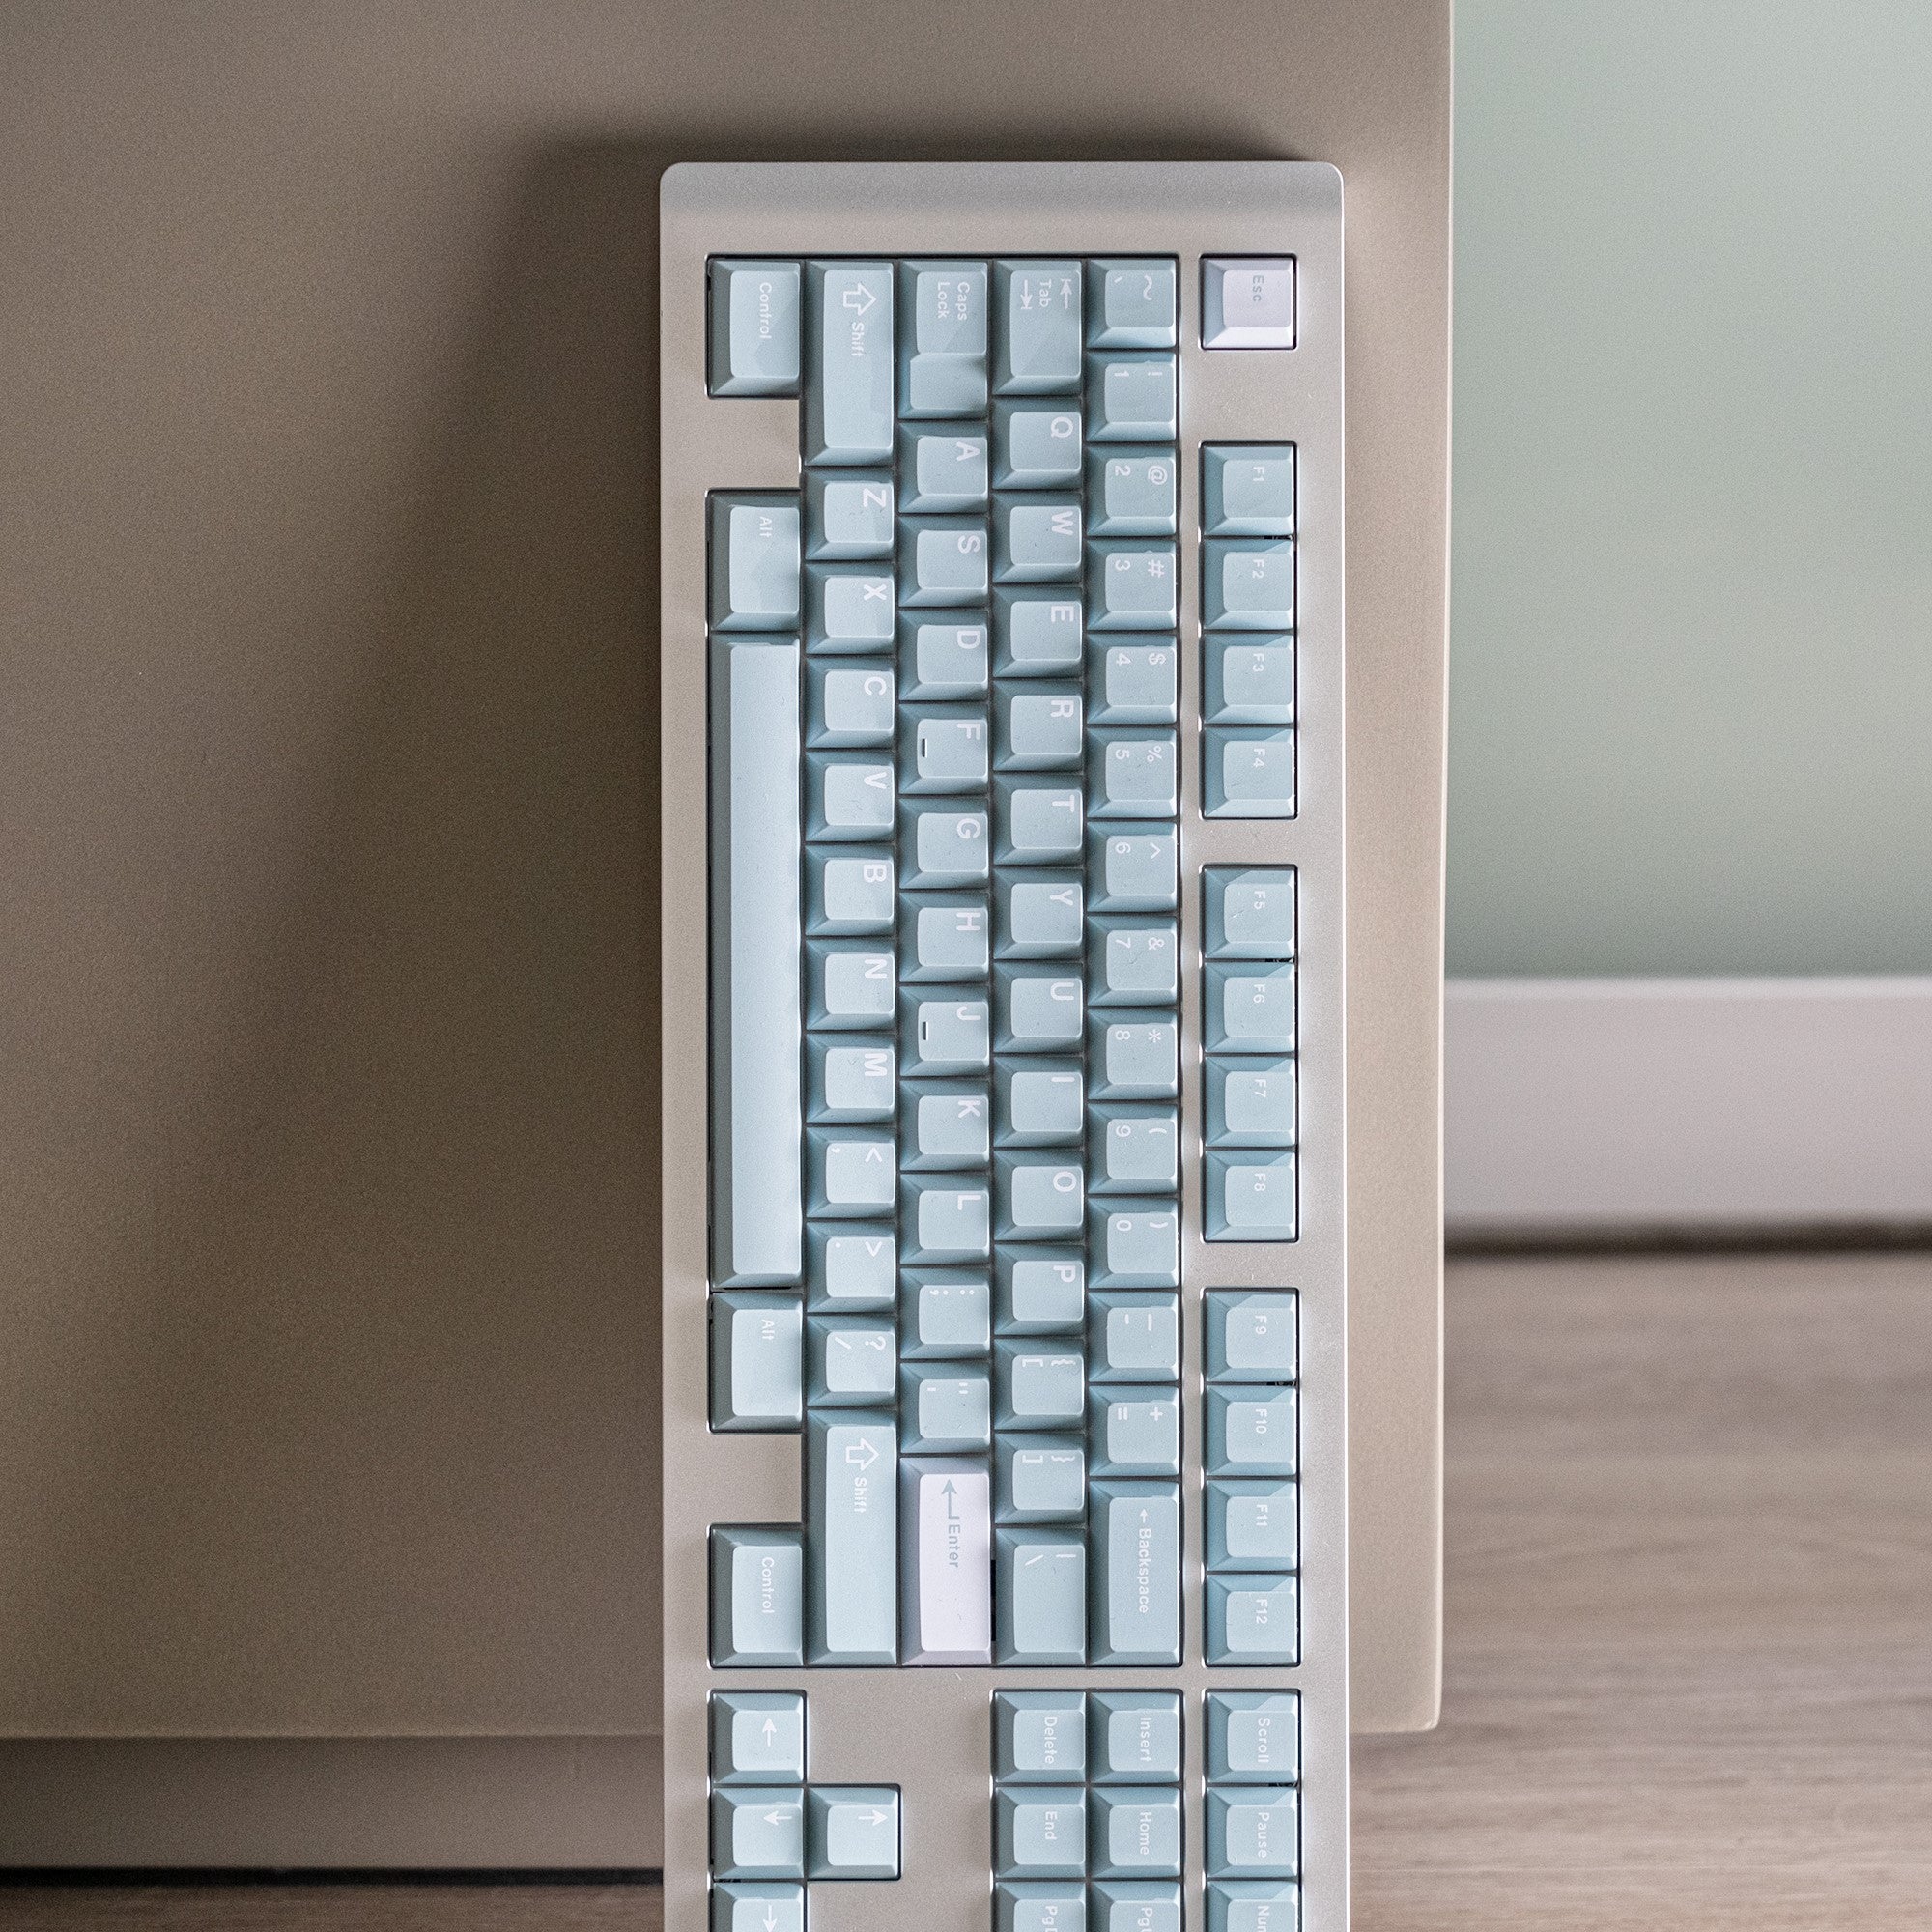 Spectacle 80 Keyboard Kit